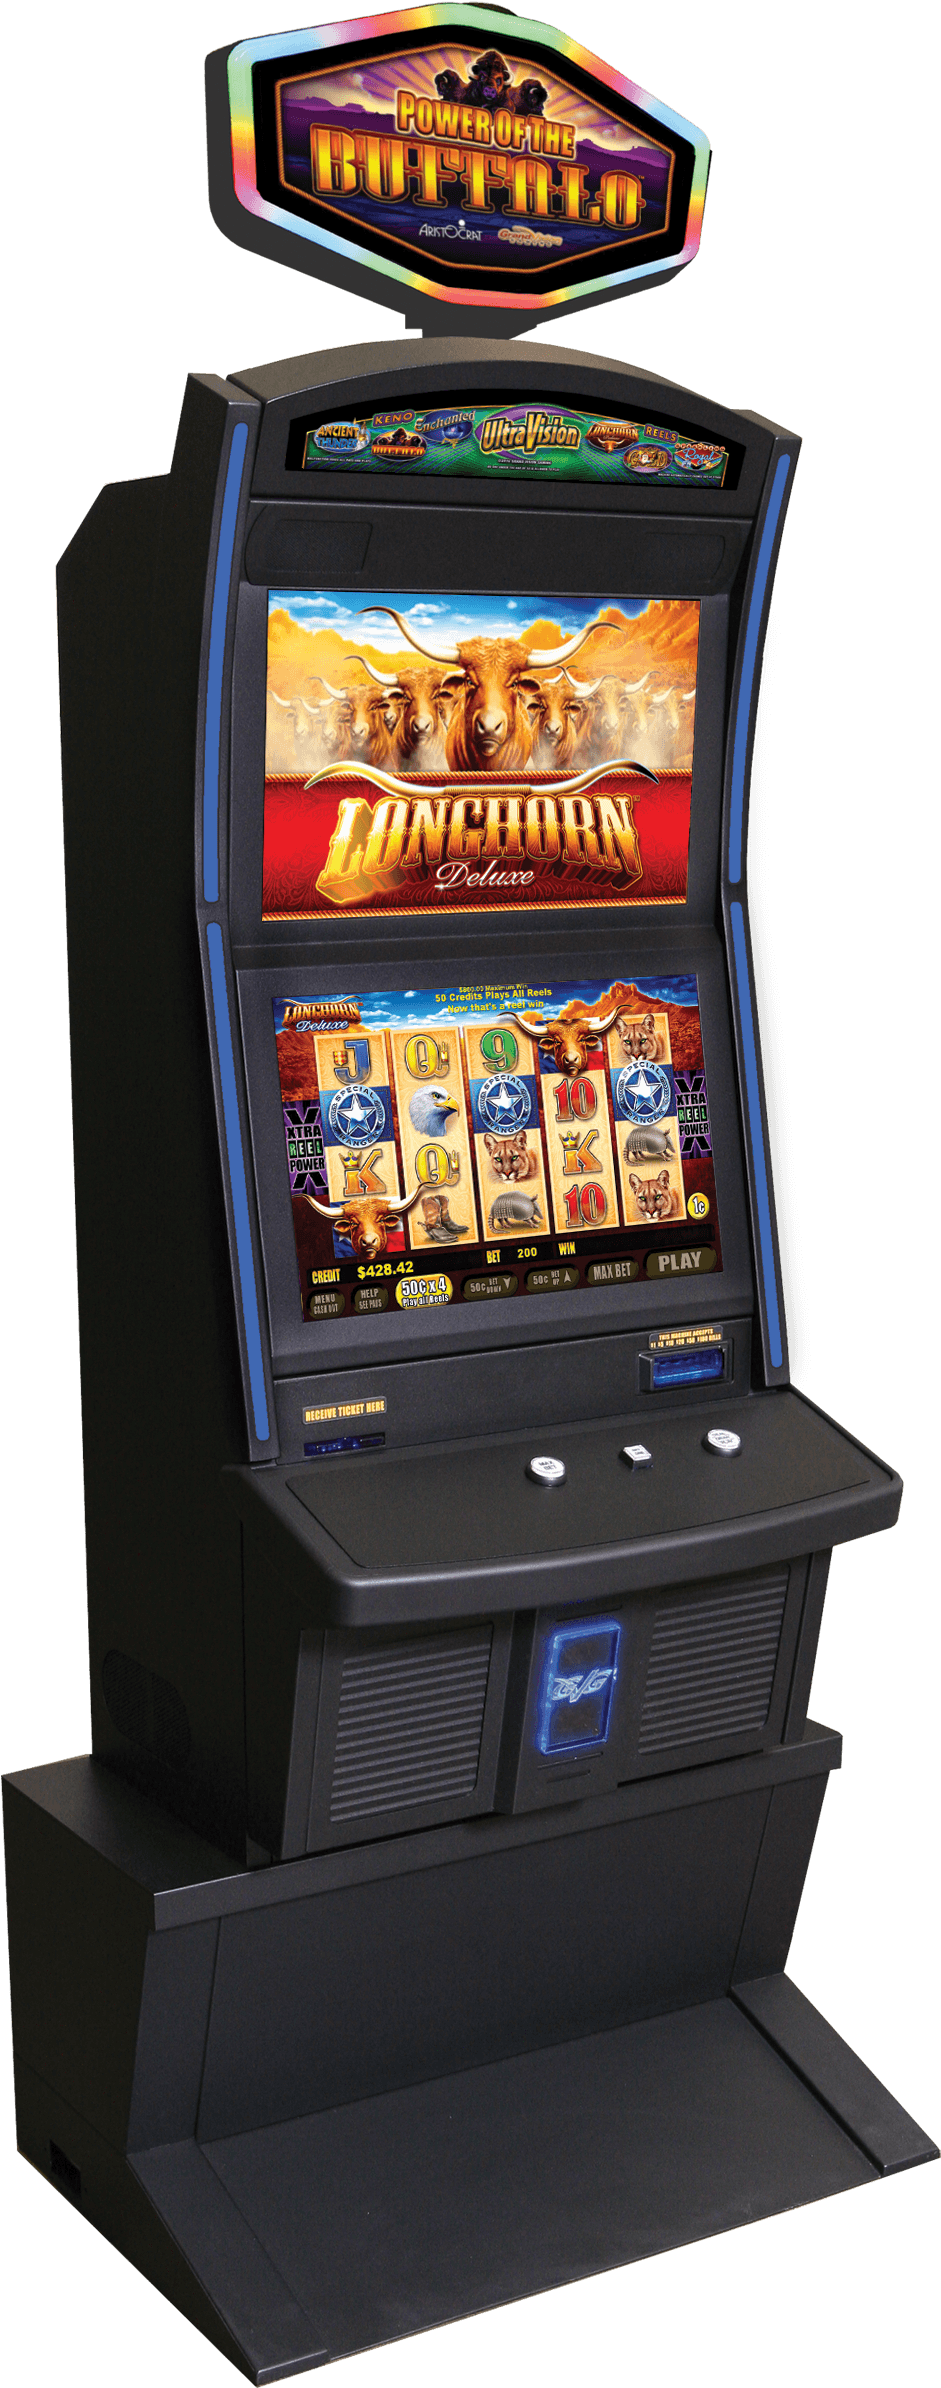 A Black Slot Machine With A Screen